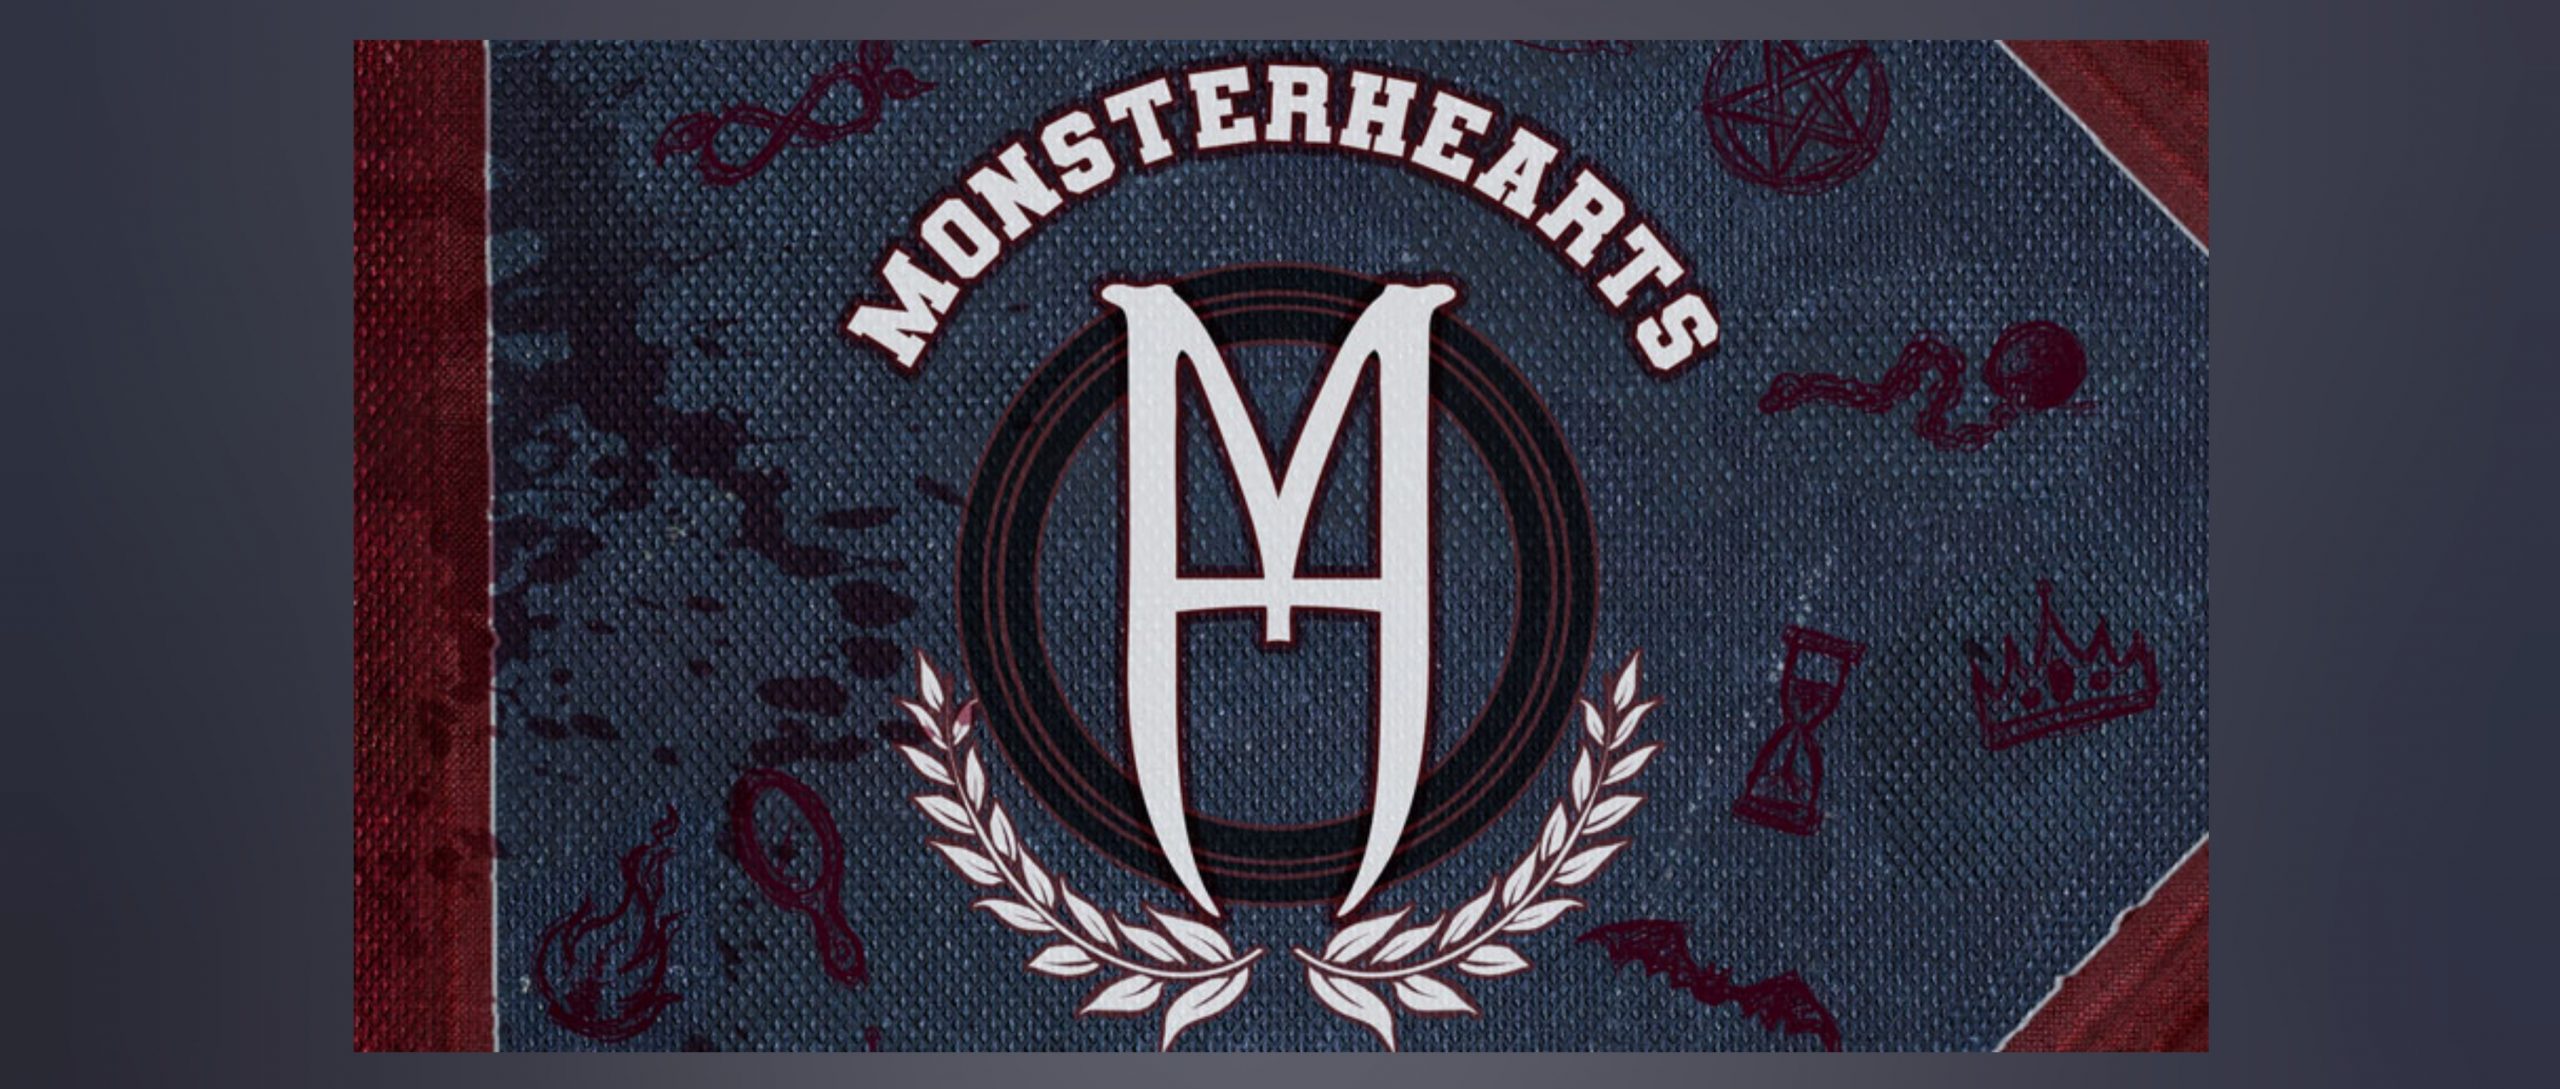 Monsterhearts – Kampagnen